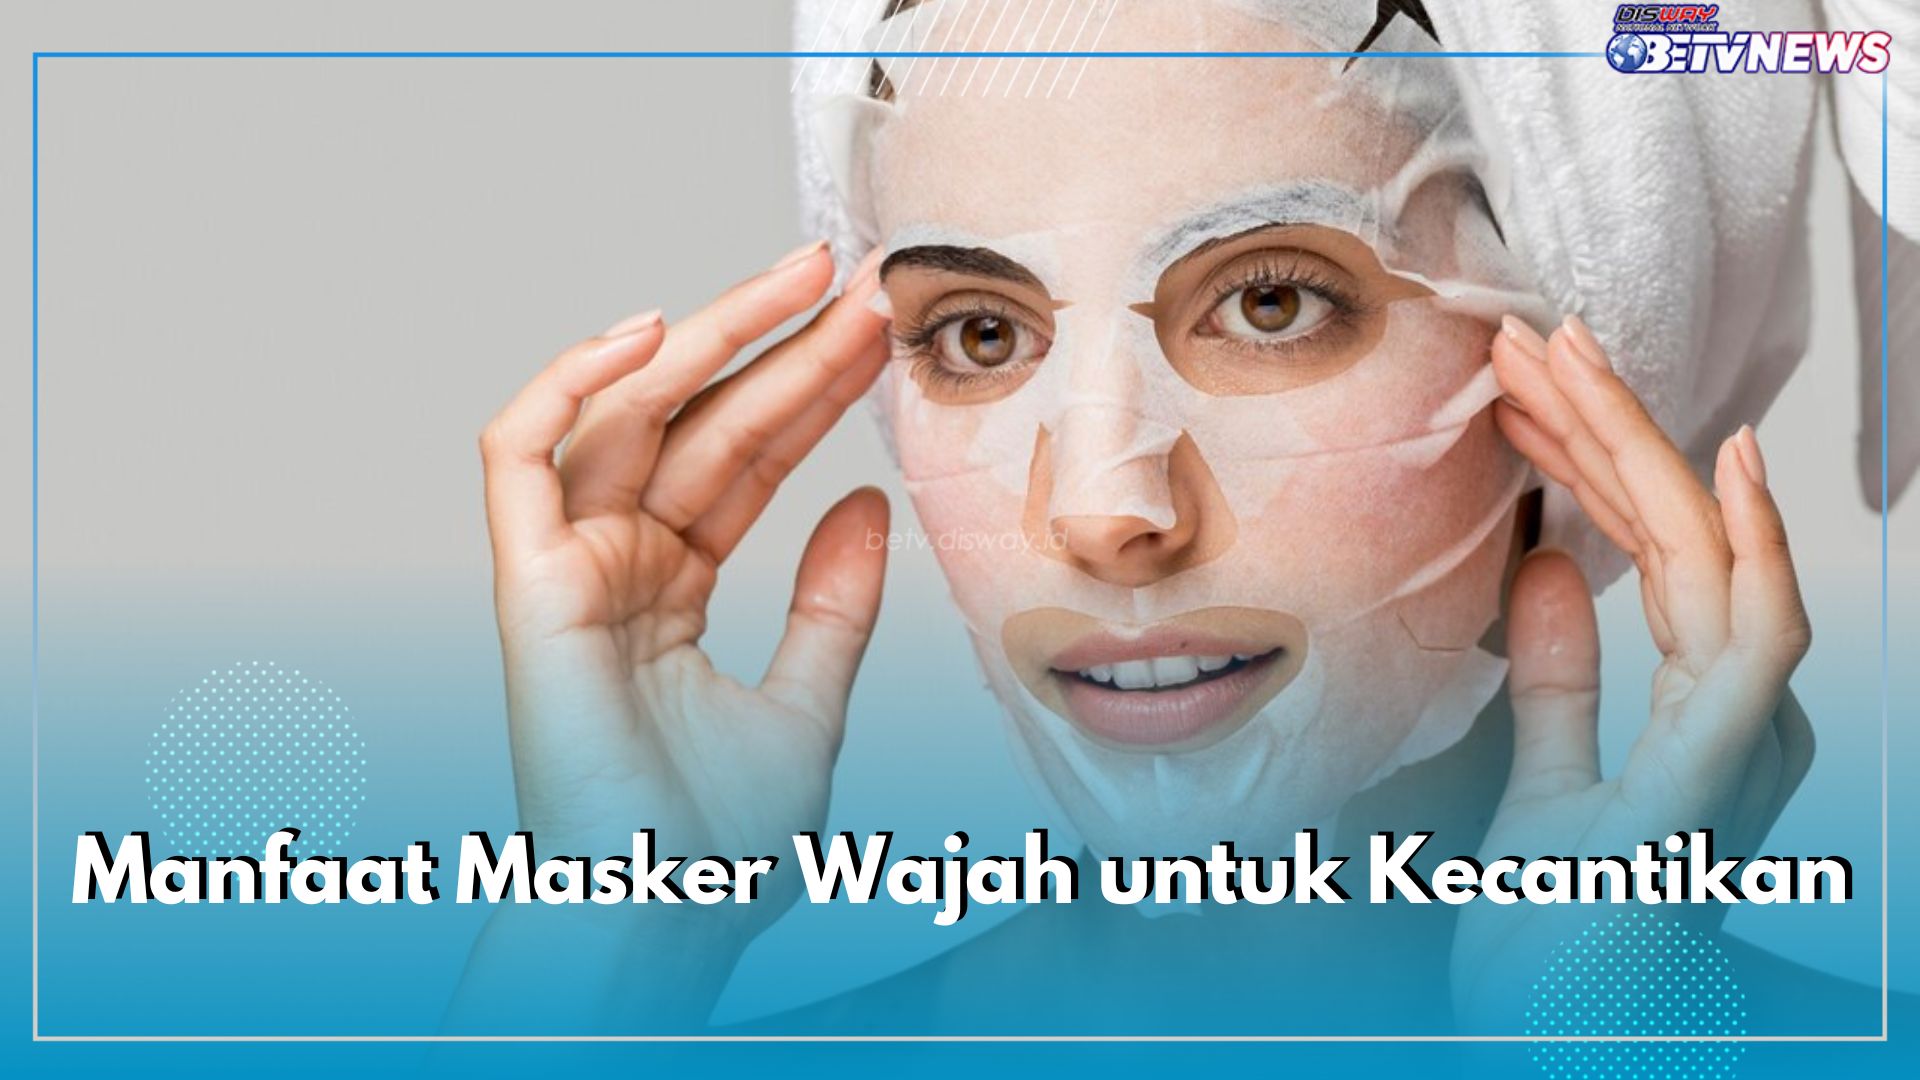 Inilah 5 Manfaat Masker Wajah Untuk Kecantikan Kulit, Dapat Mencerahkan Hingga Melembabkan